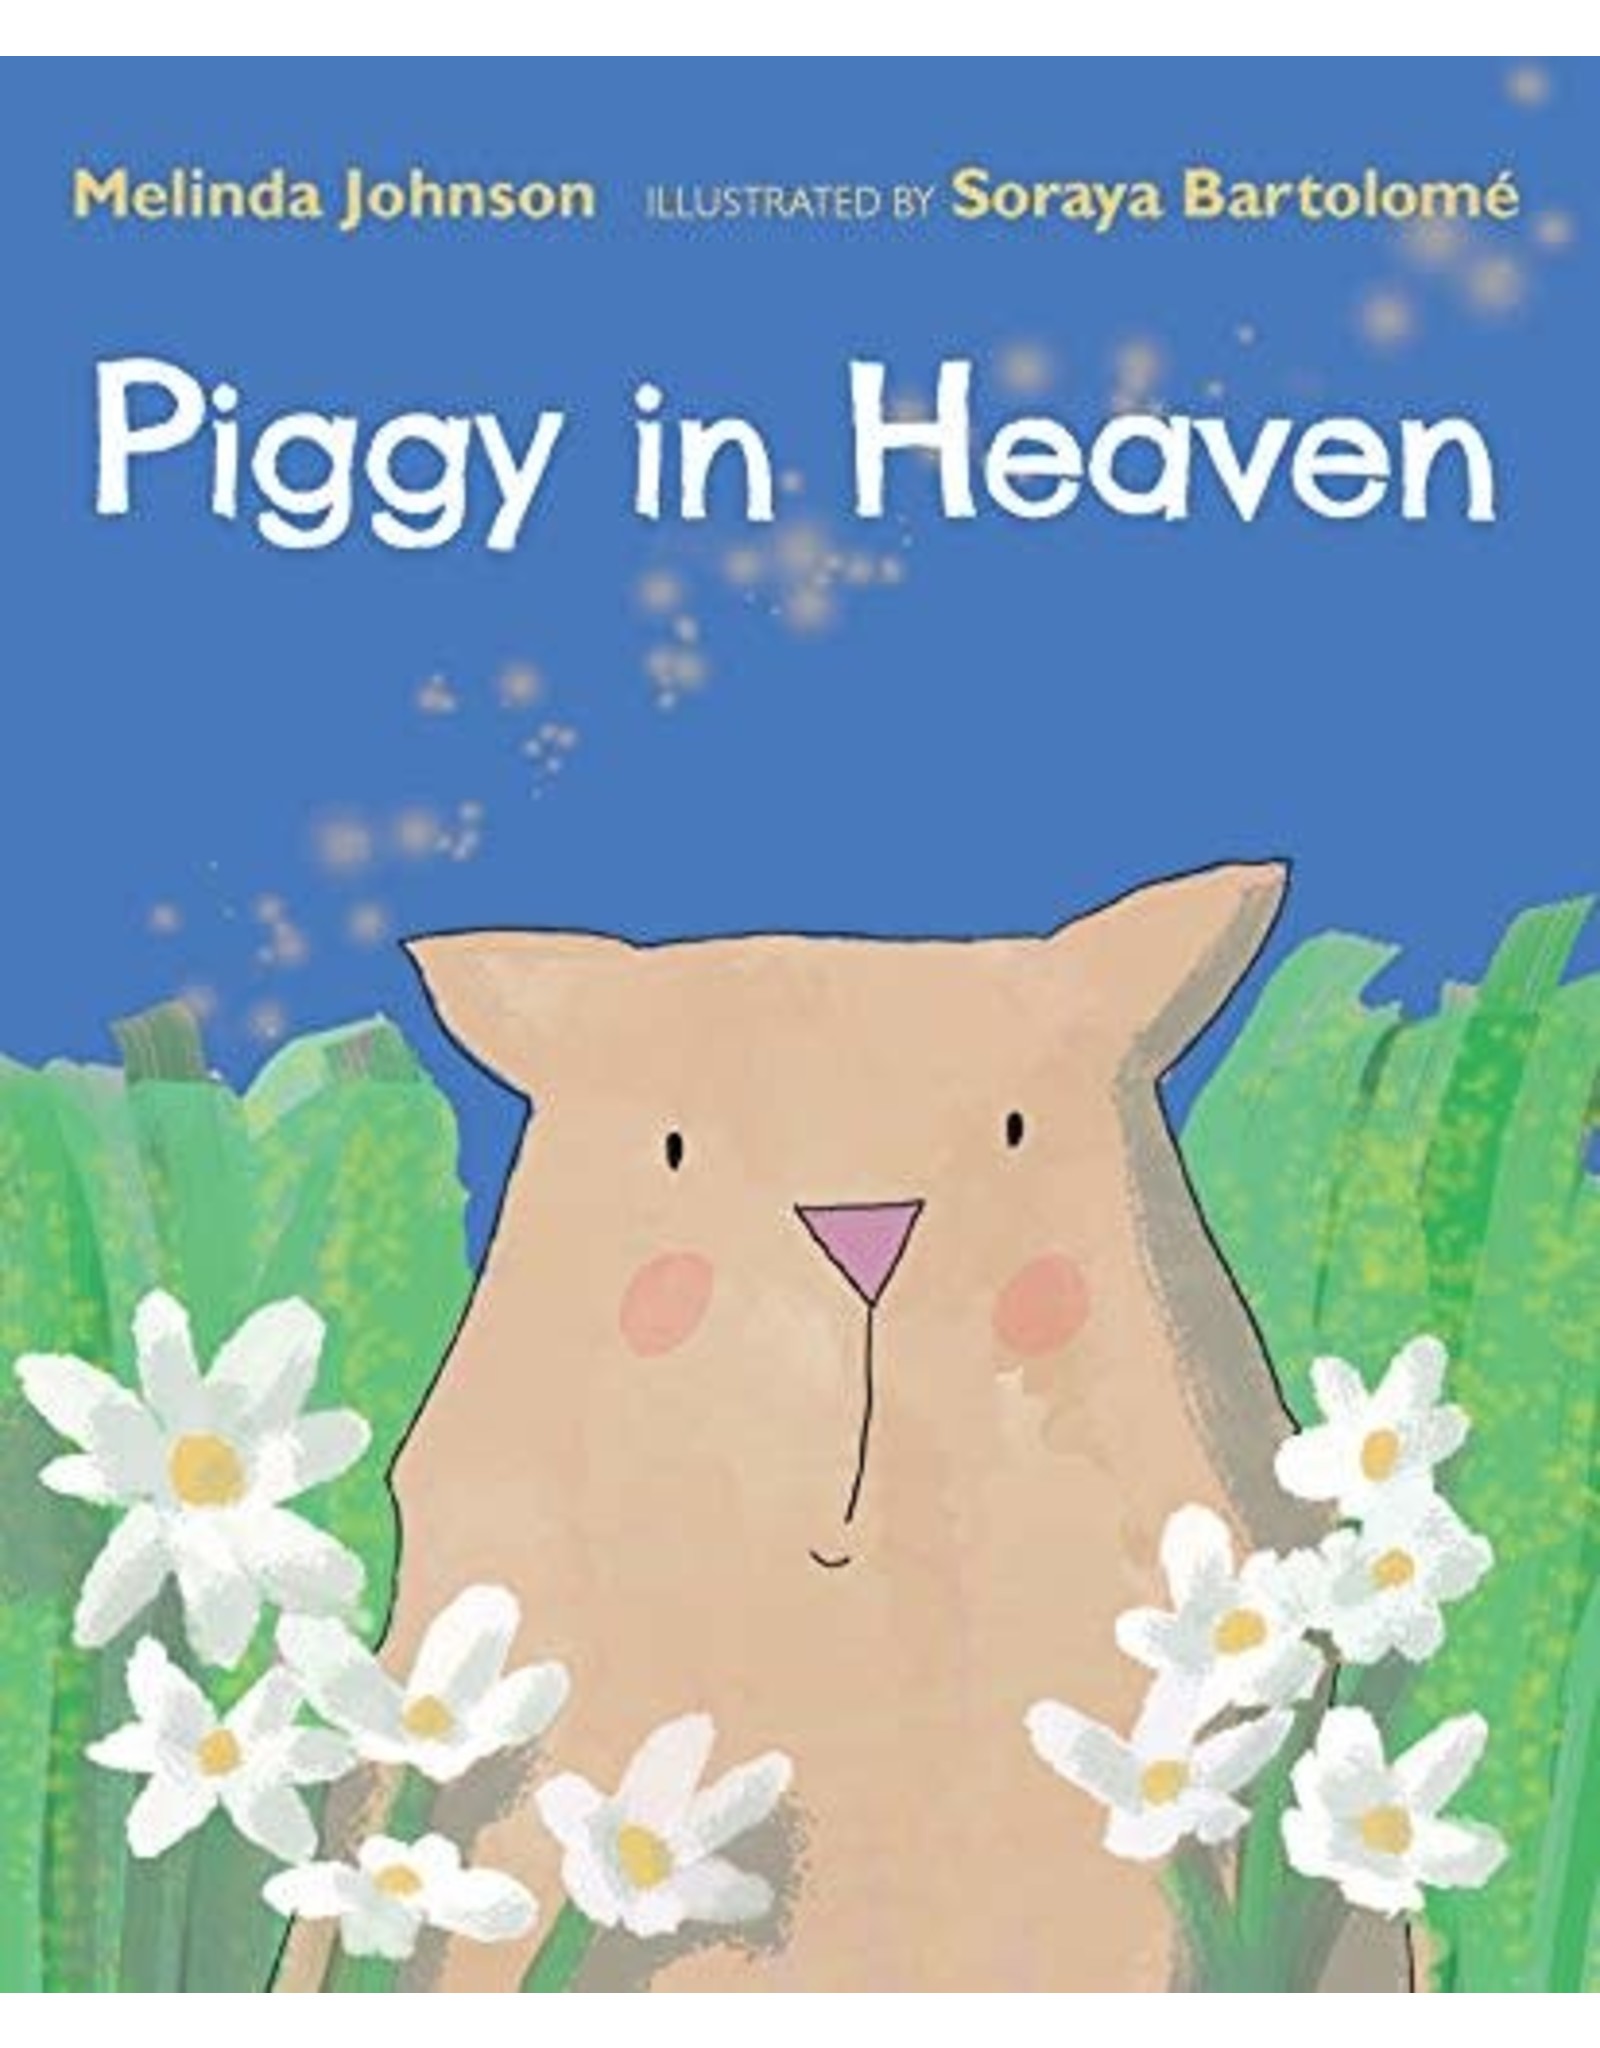 Paraclete Press Piggy in Heaven by Melinda Johnson (Board Book)